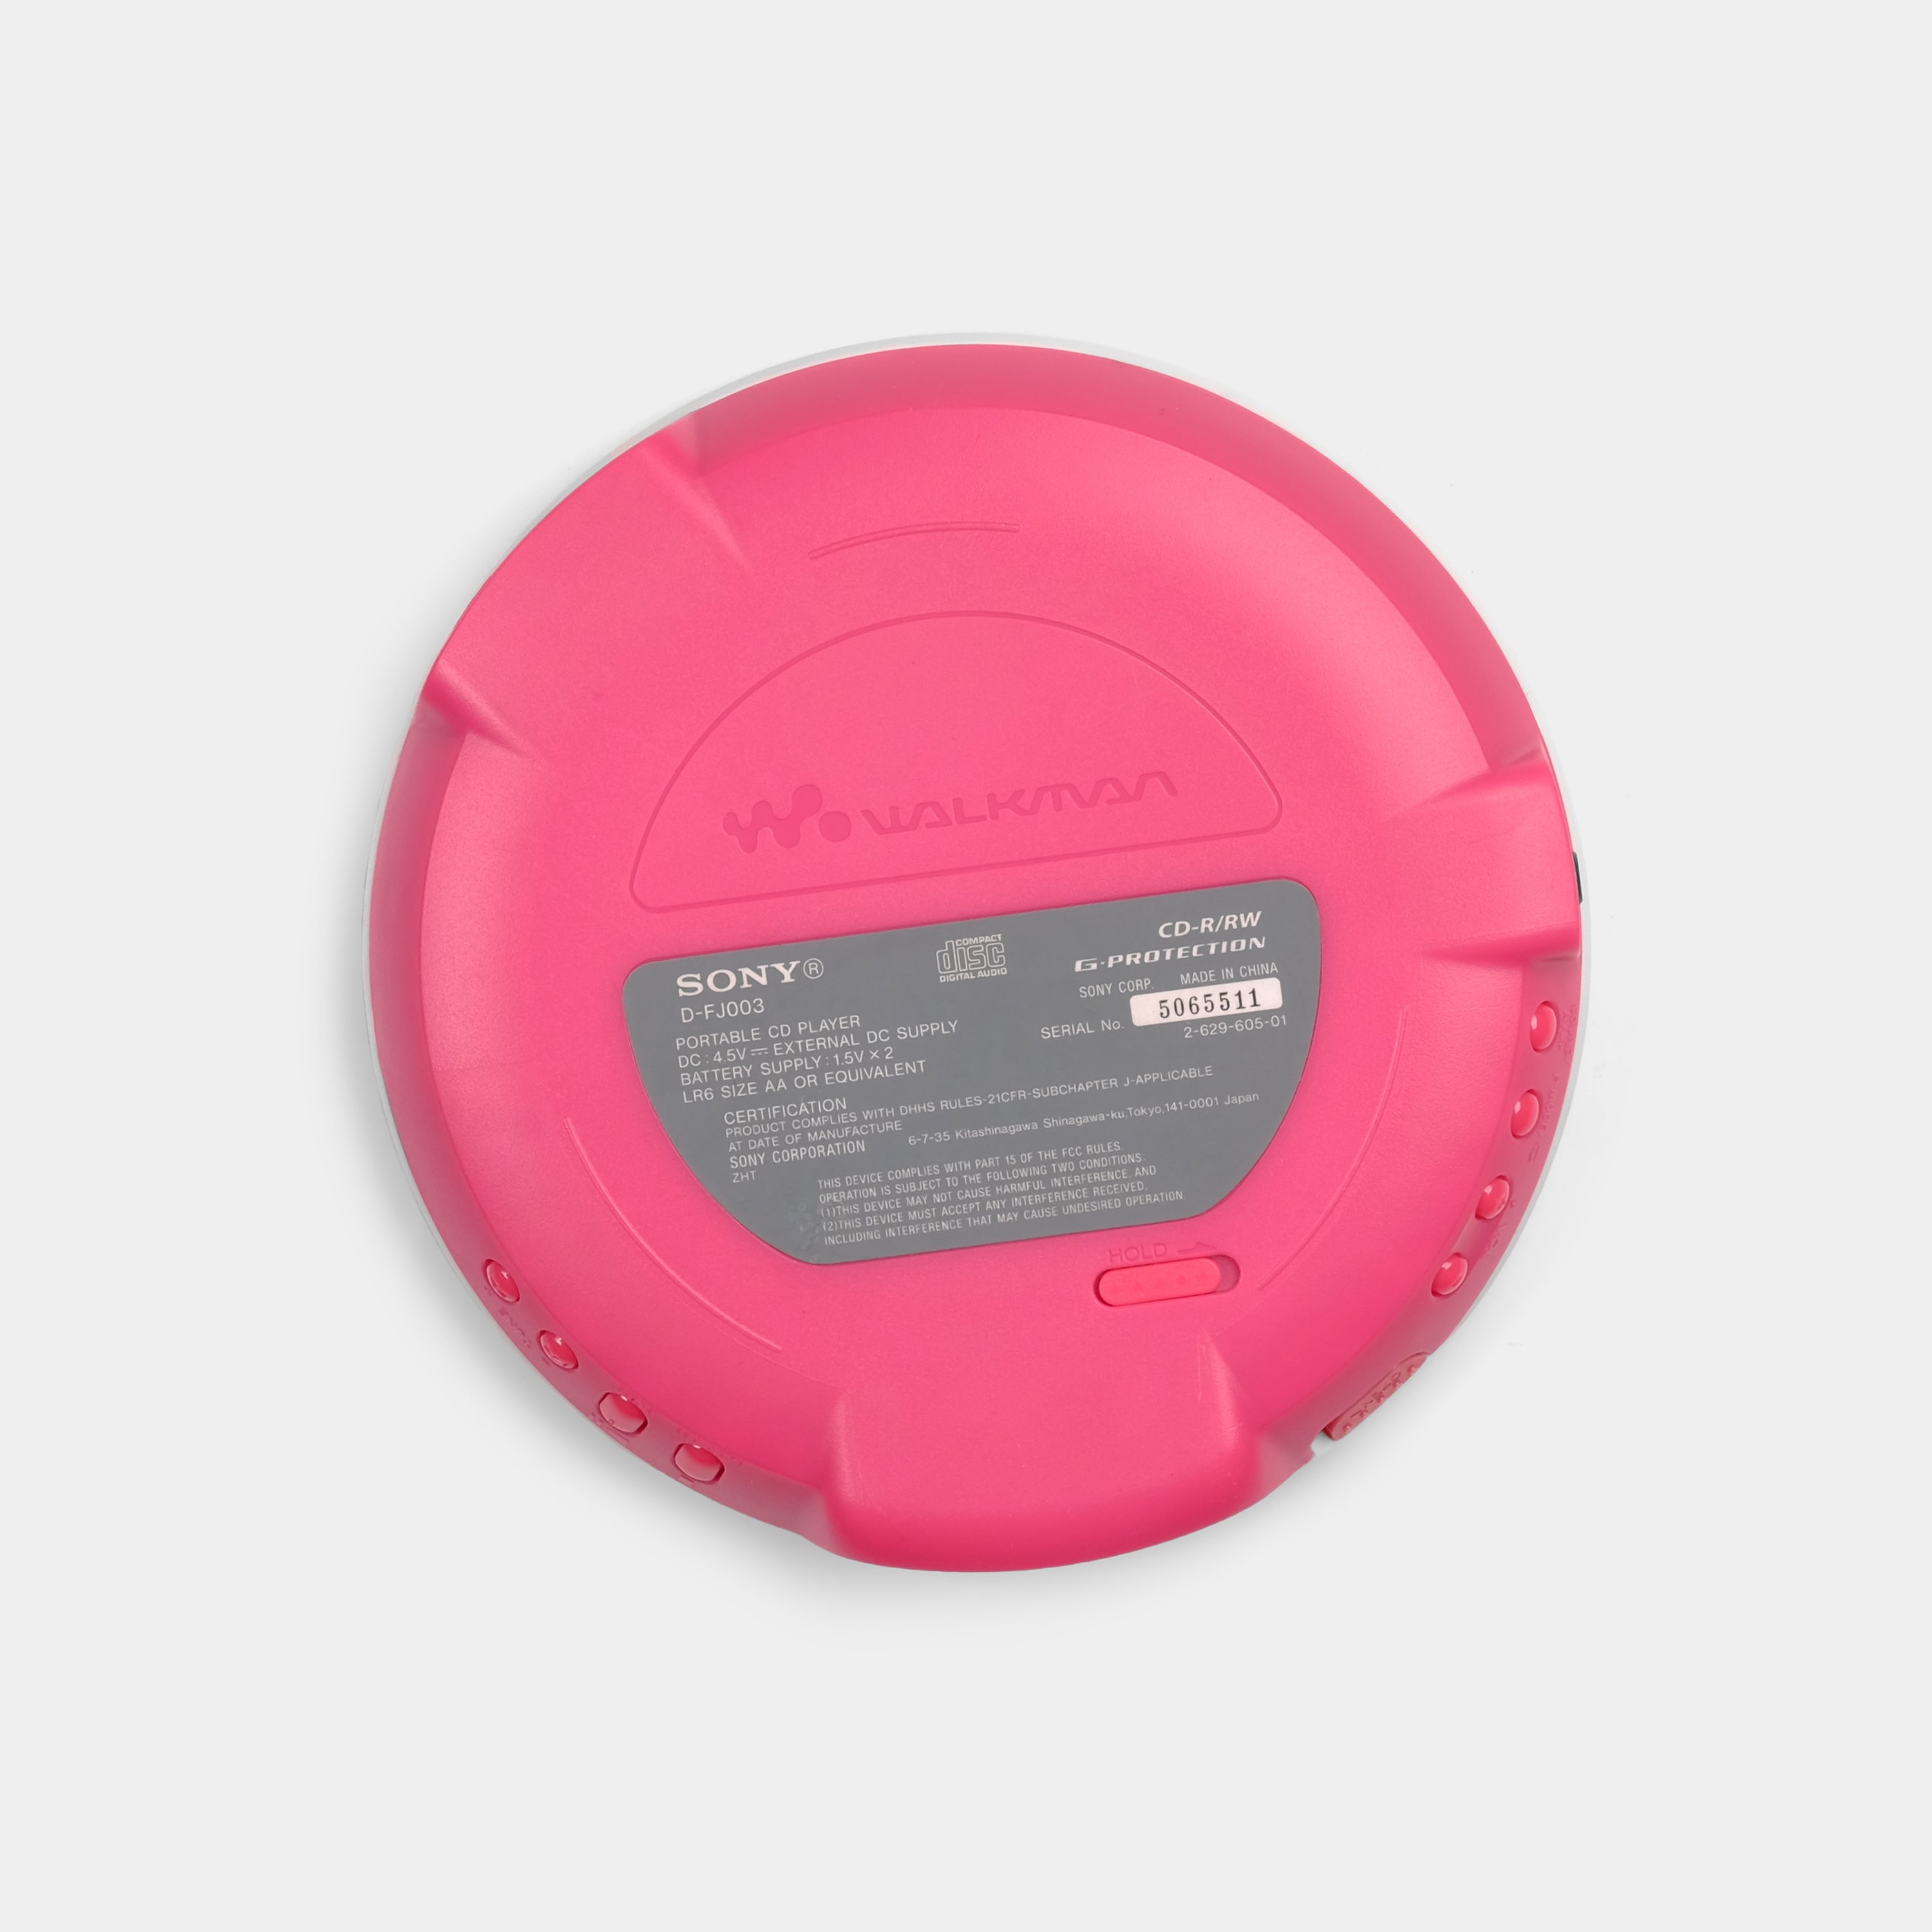 Sony Walkman D-FJ003 Pink Portable CD Player